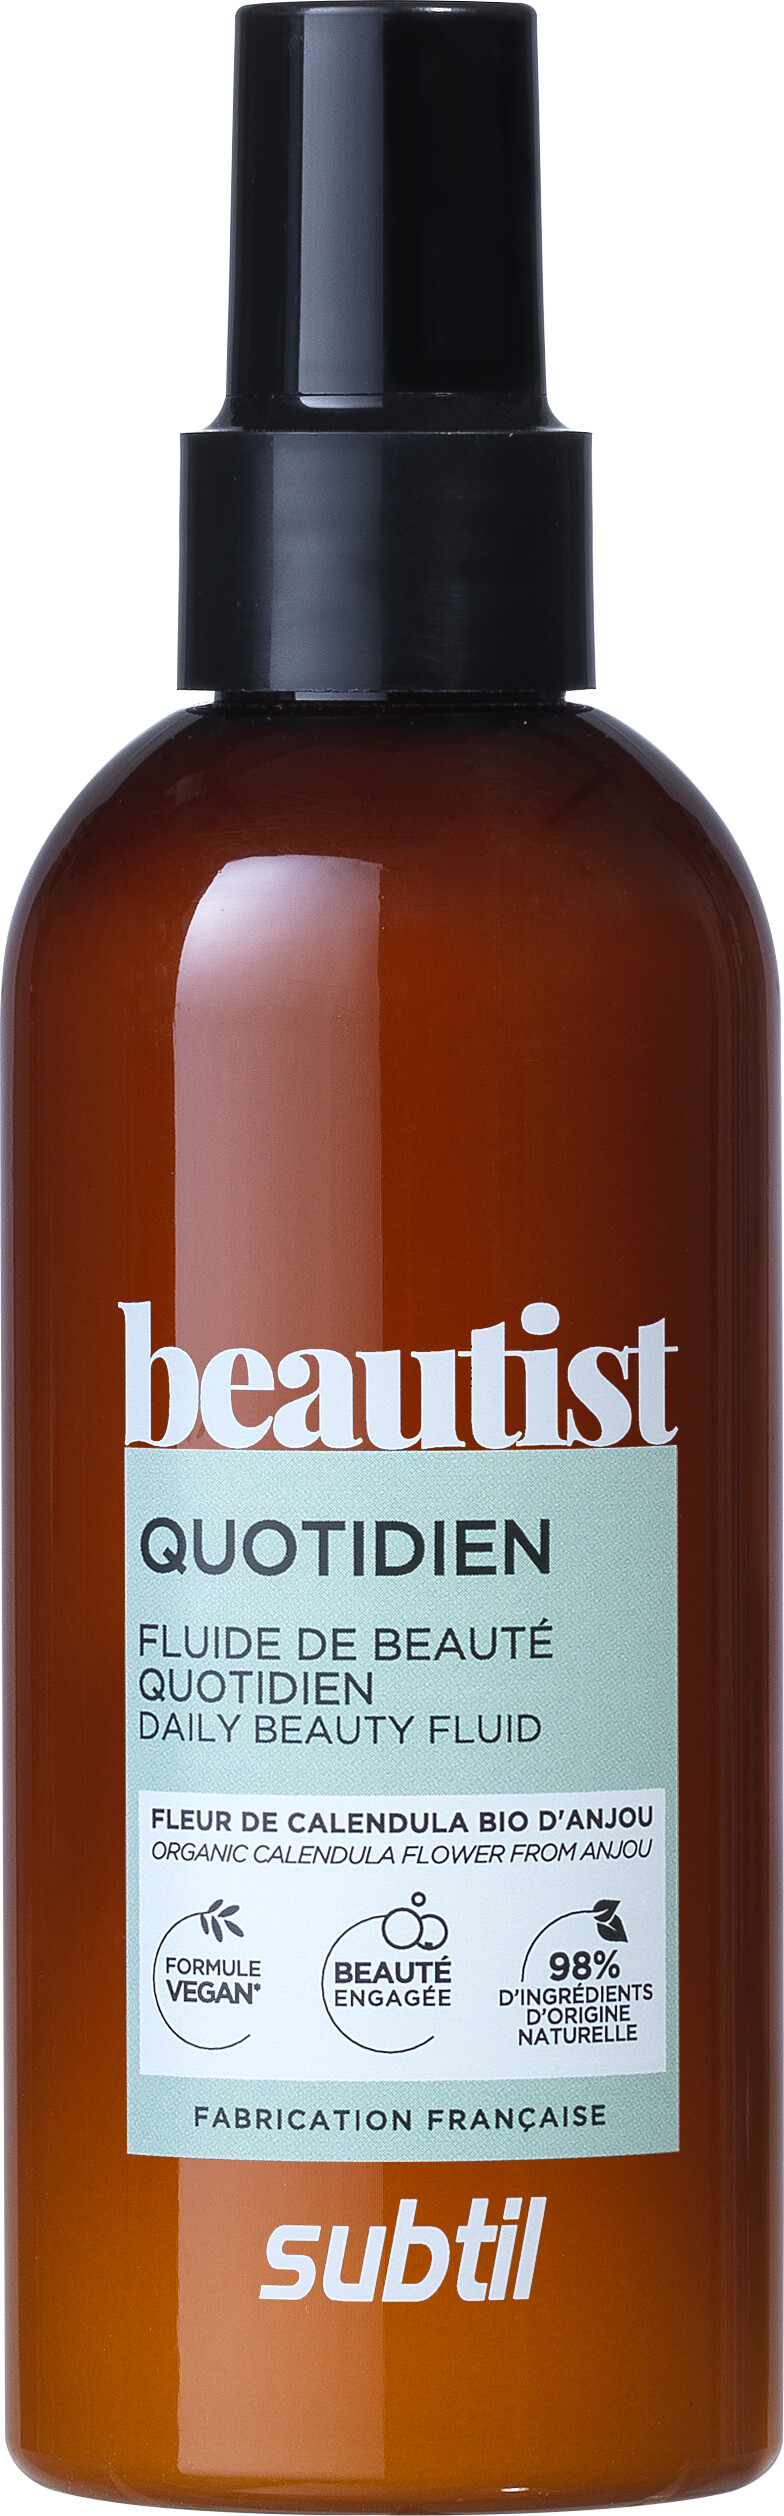 Se Subtil Beautist - Daily Beauty Fluid - Organic Calendula Flower 200 Ml hos Gucca.dk